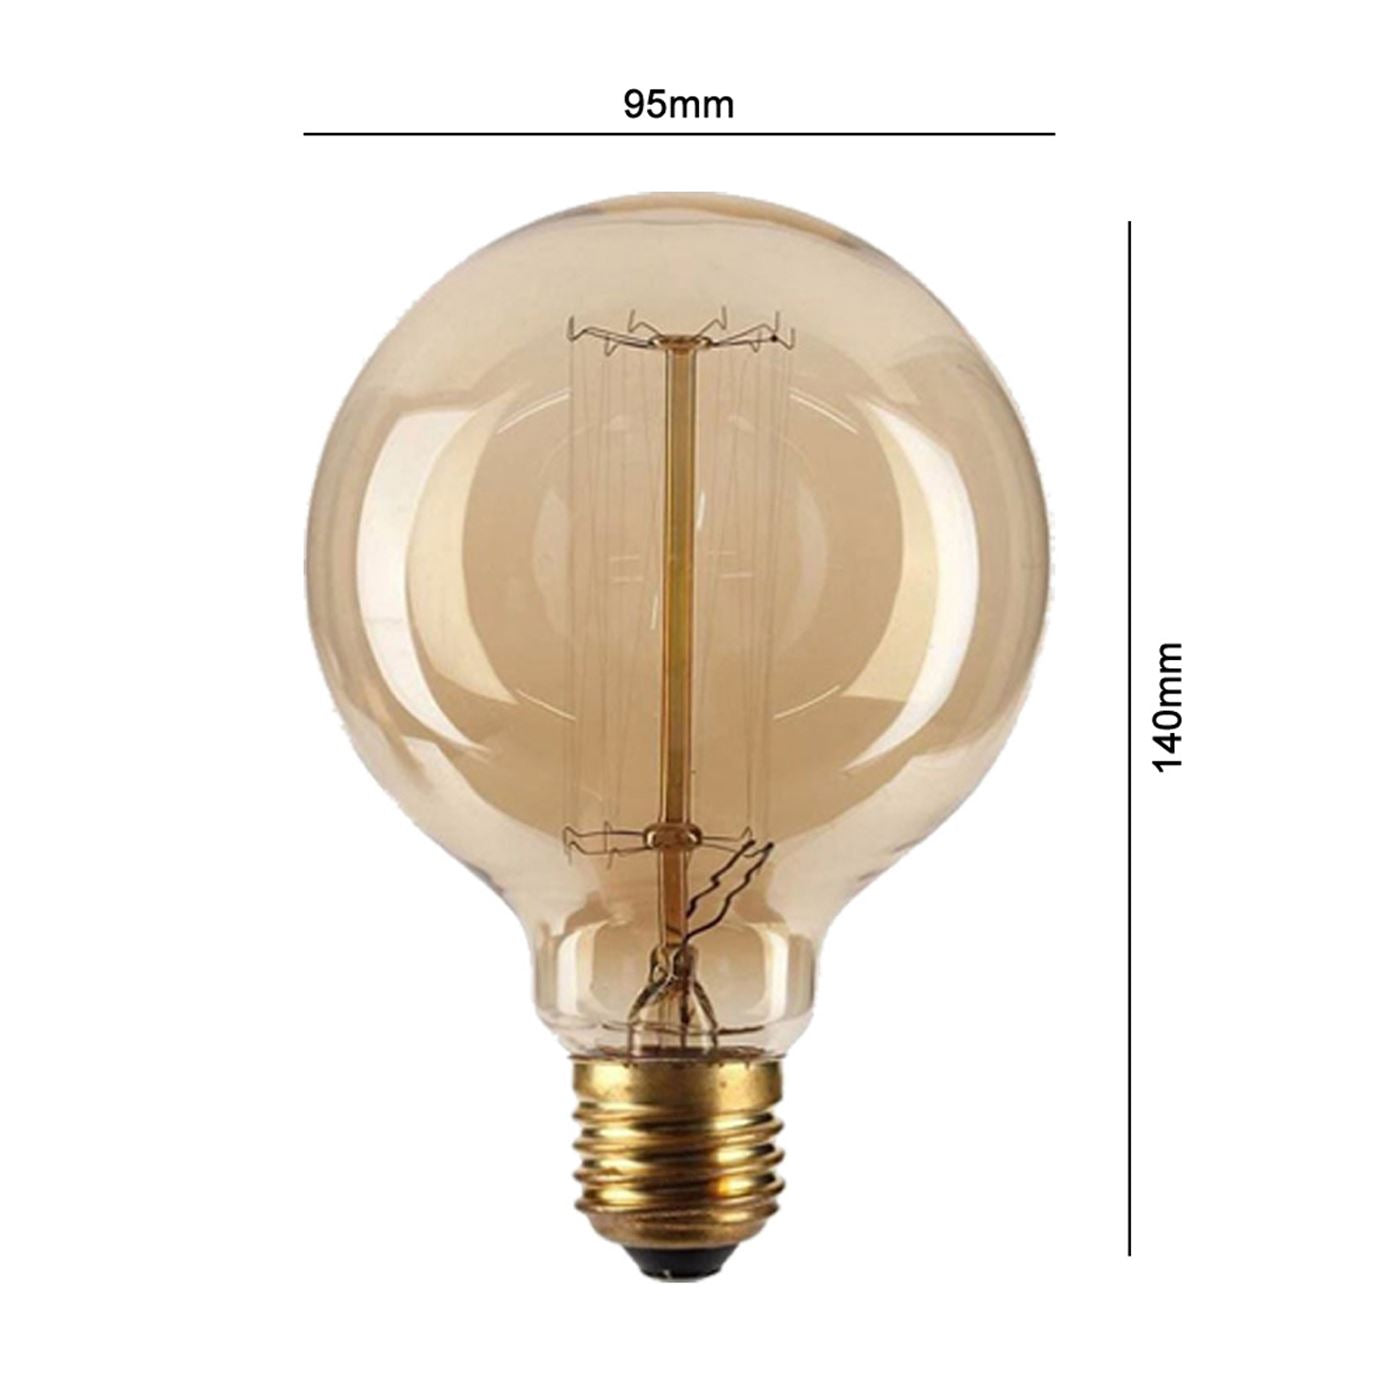 E27 Industrial Antique Style Light Bulb